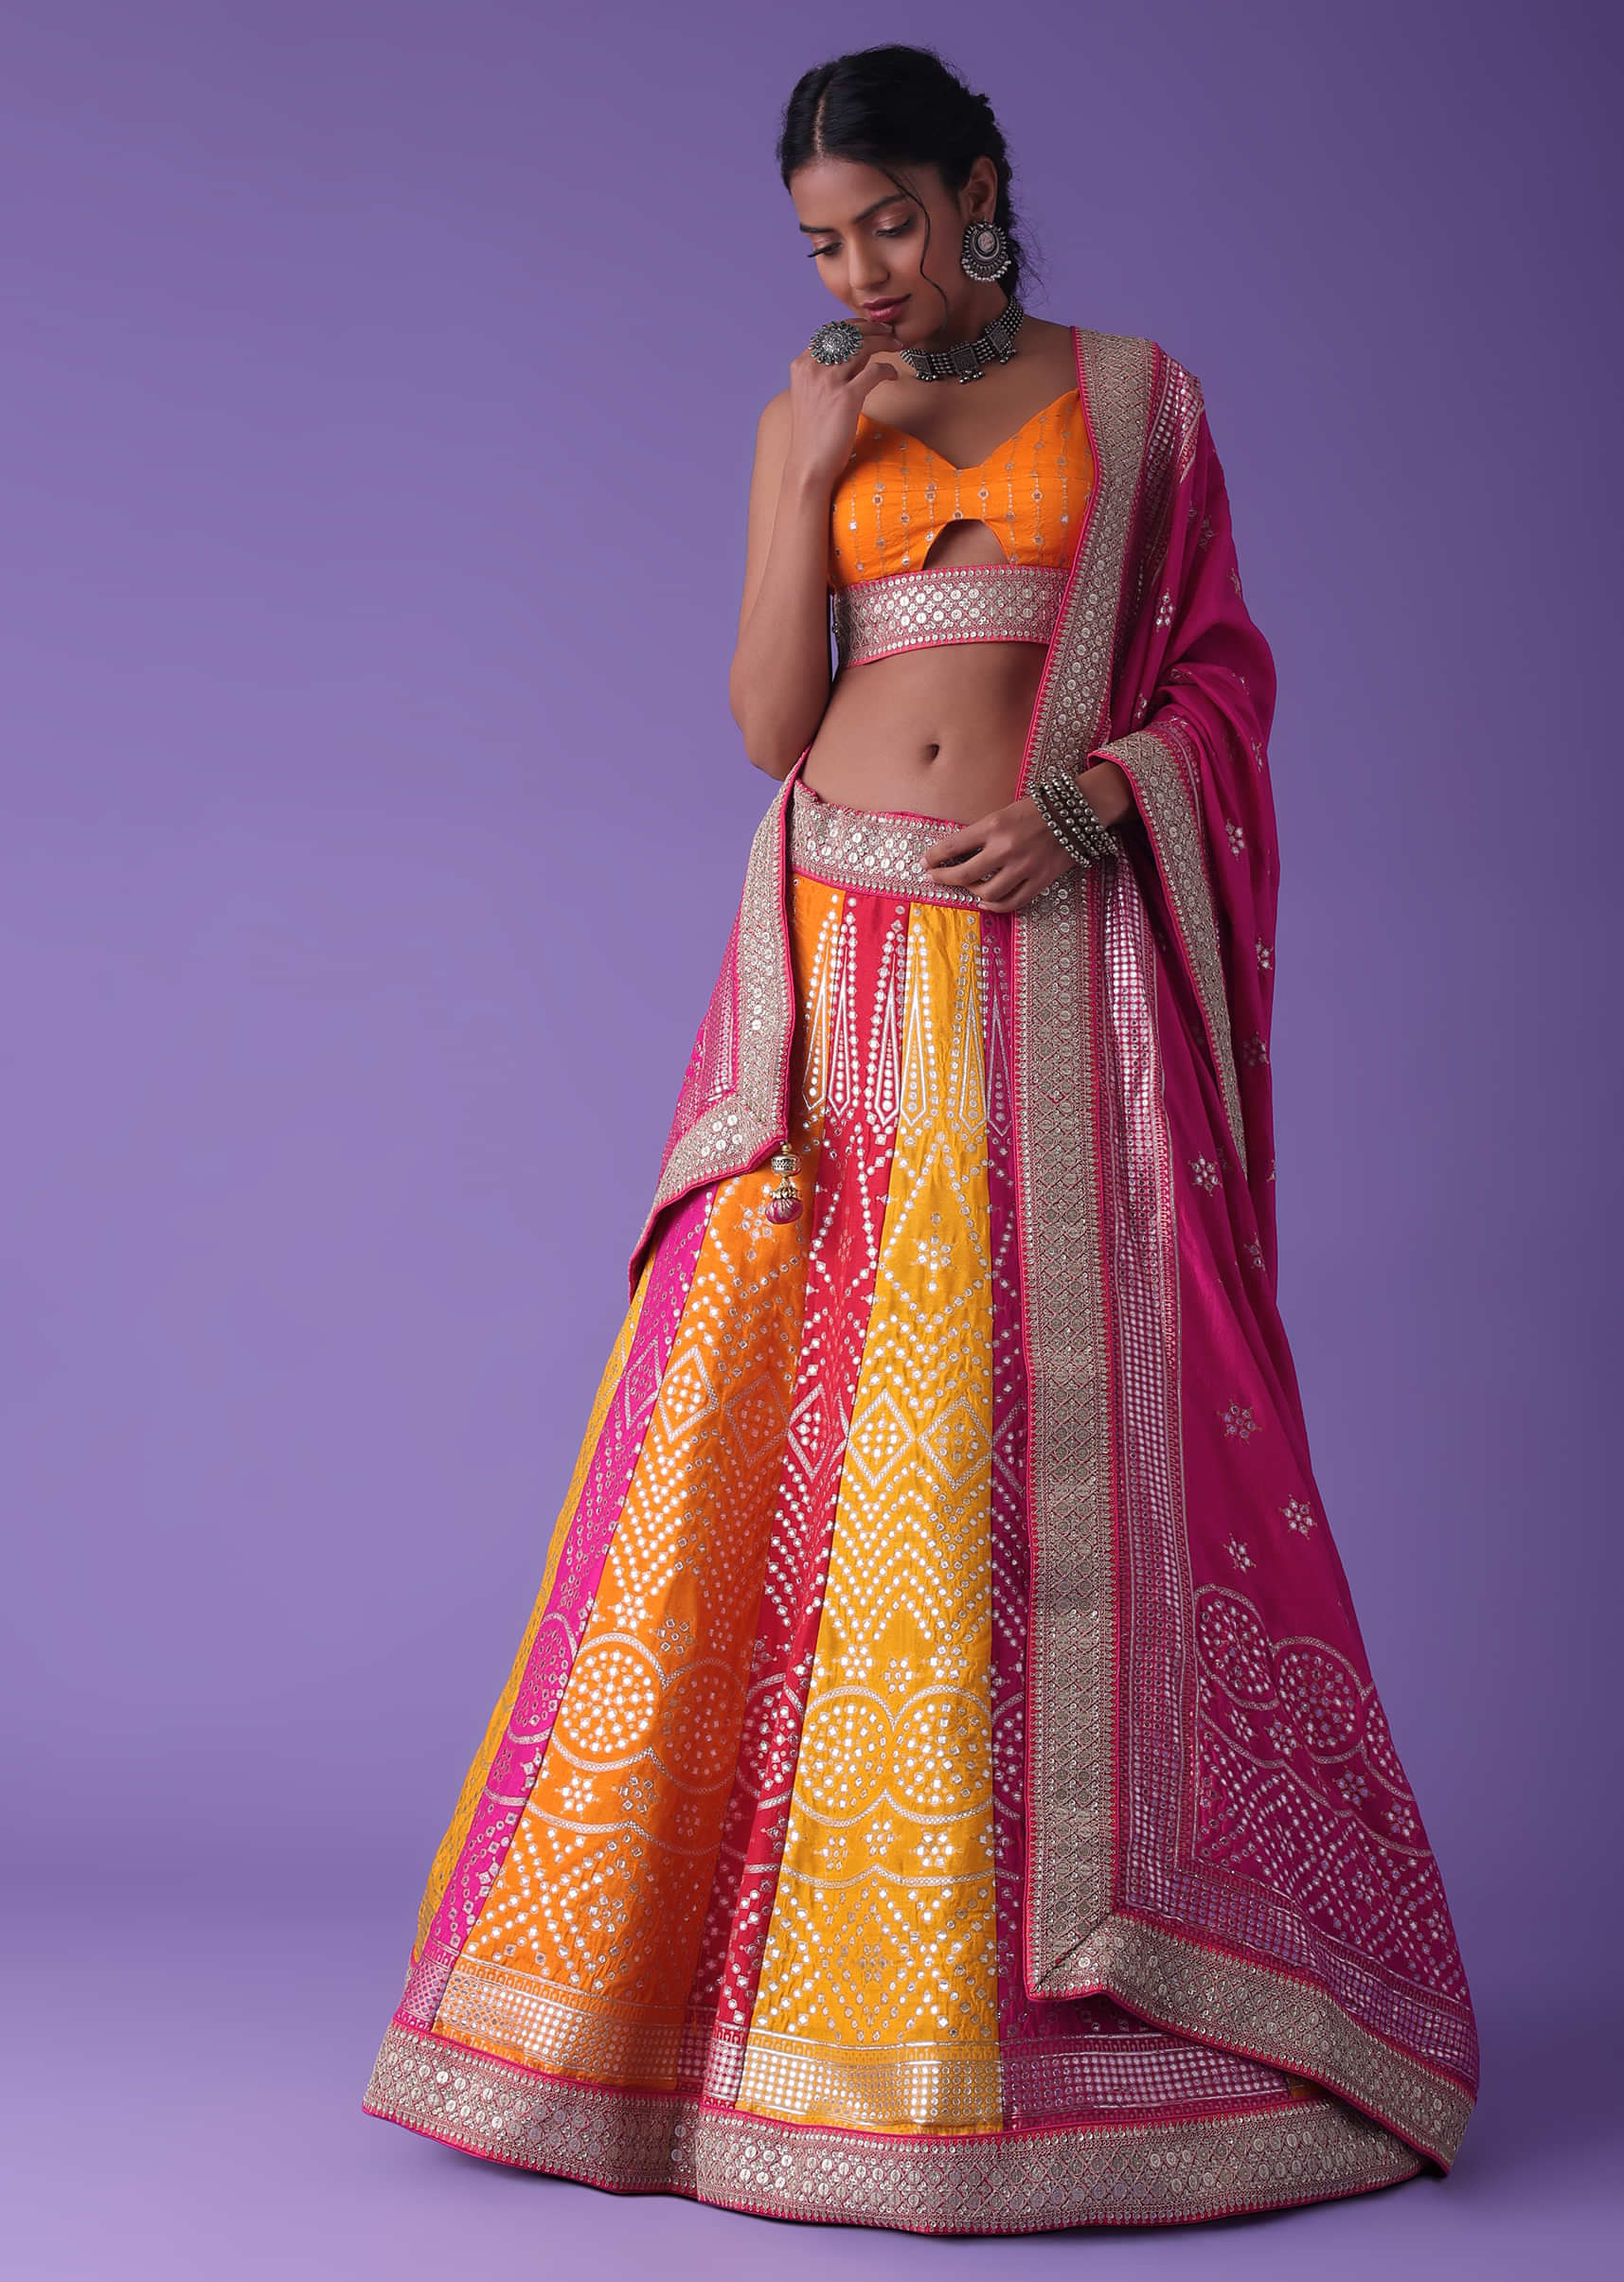 Tangerine Orange And Azalea Pink Lehenga In Woven Banarasi Silk